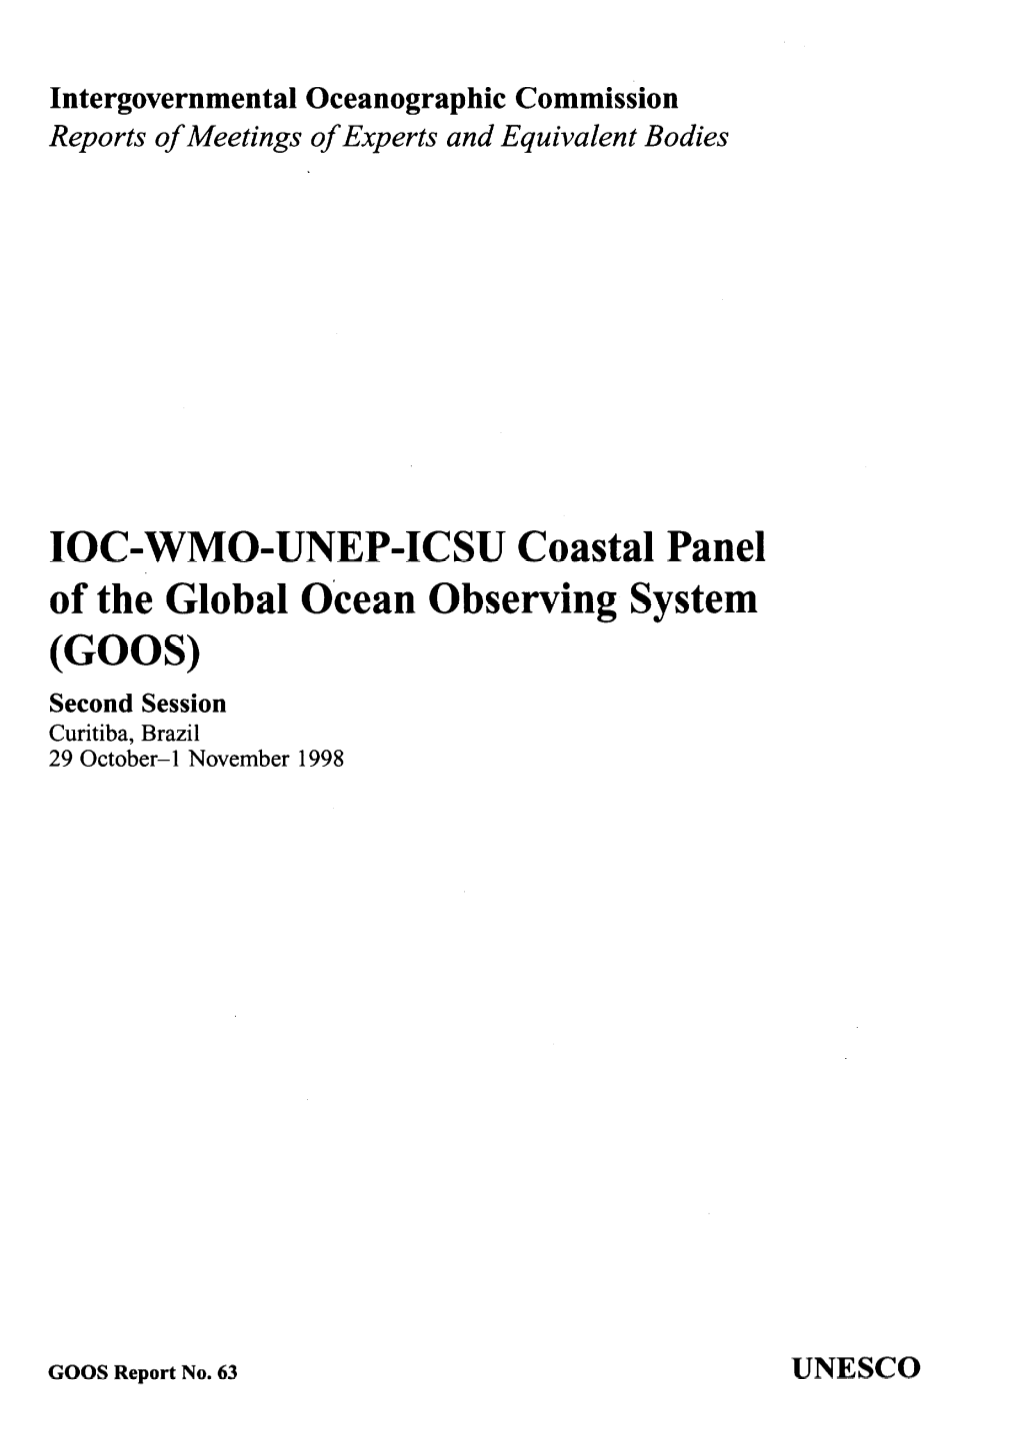 IOC/WMO/UNEP/ICSU Coastal Panel of the Global Ocean Observing